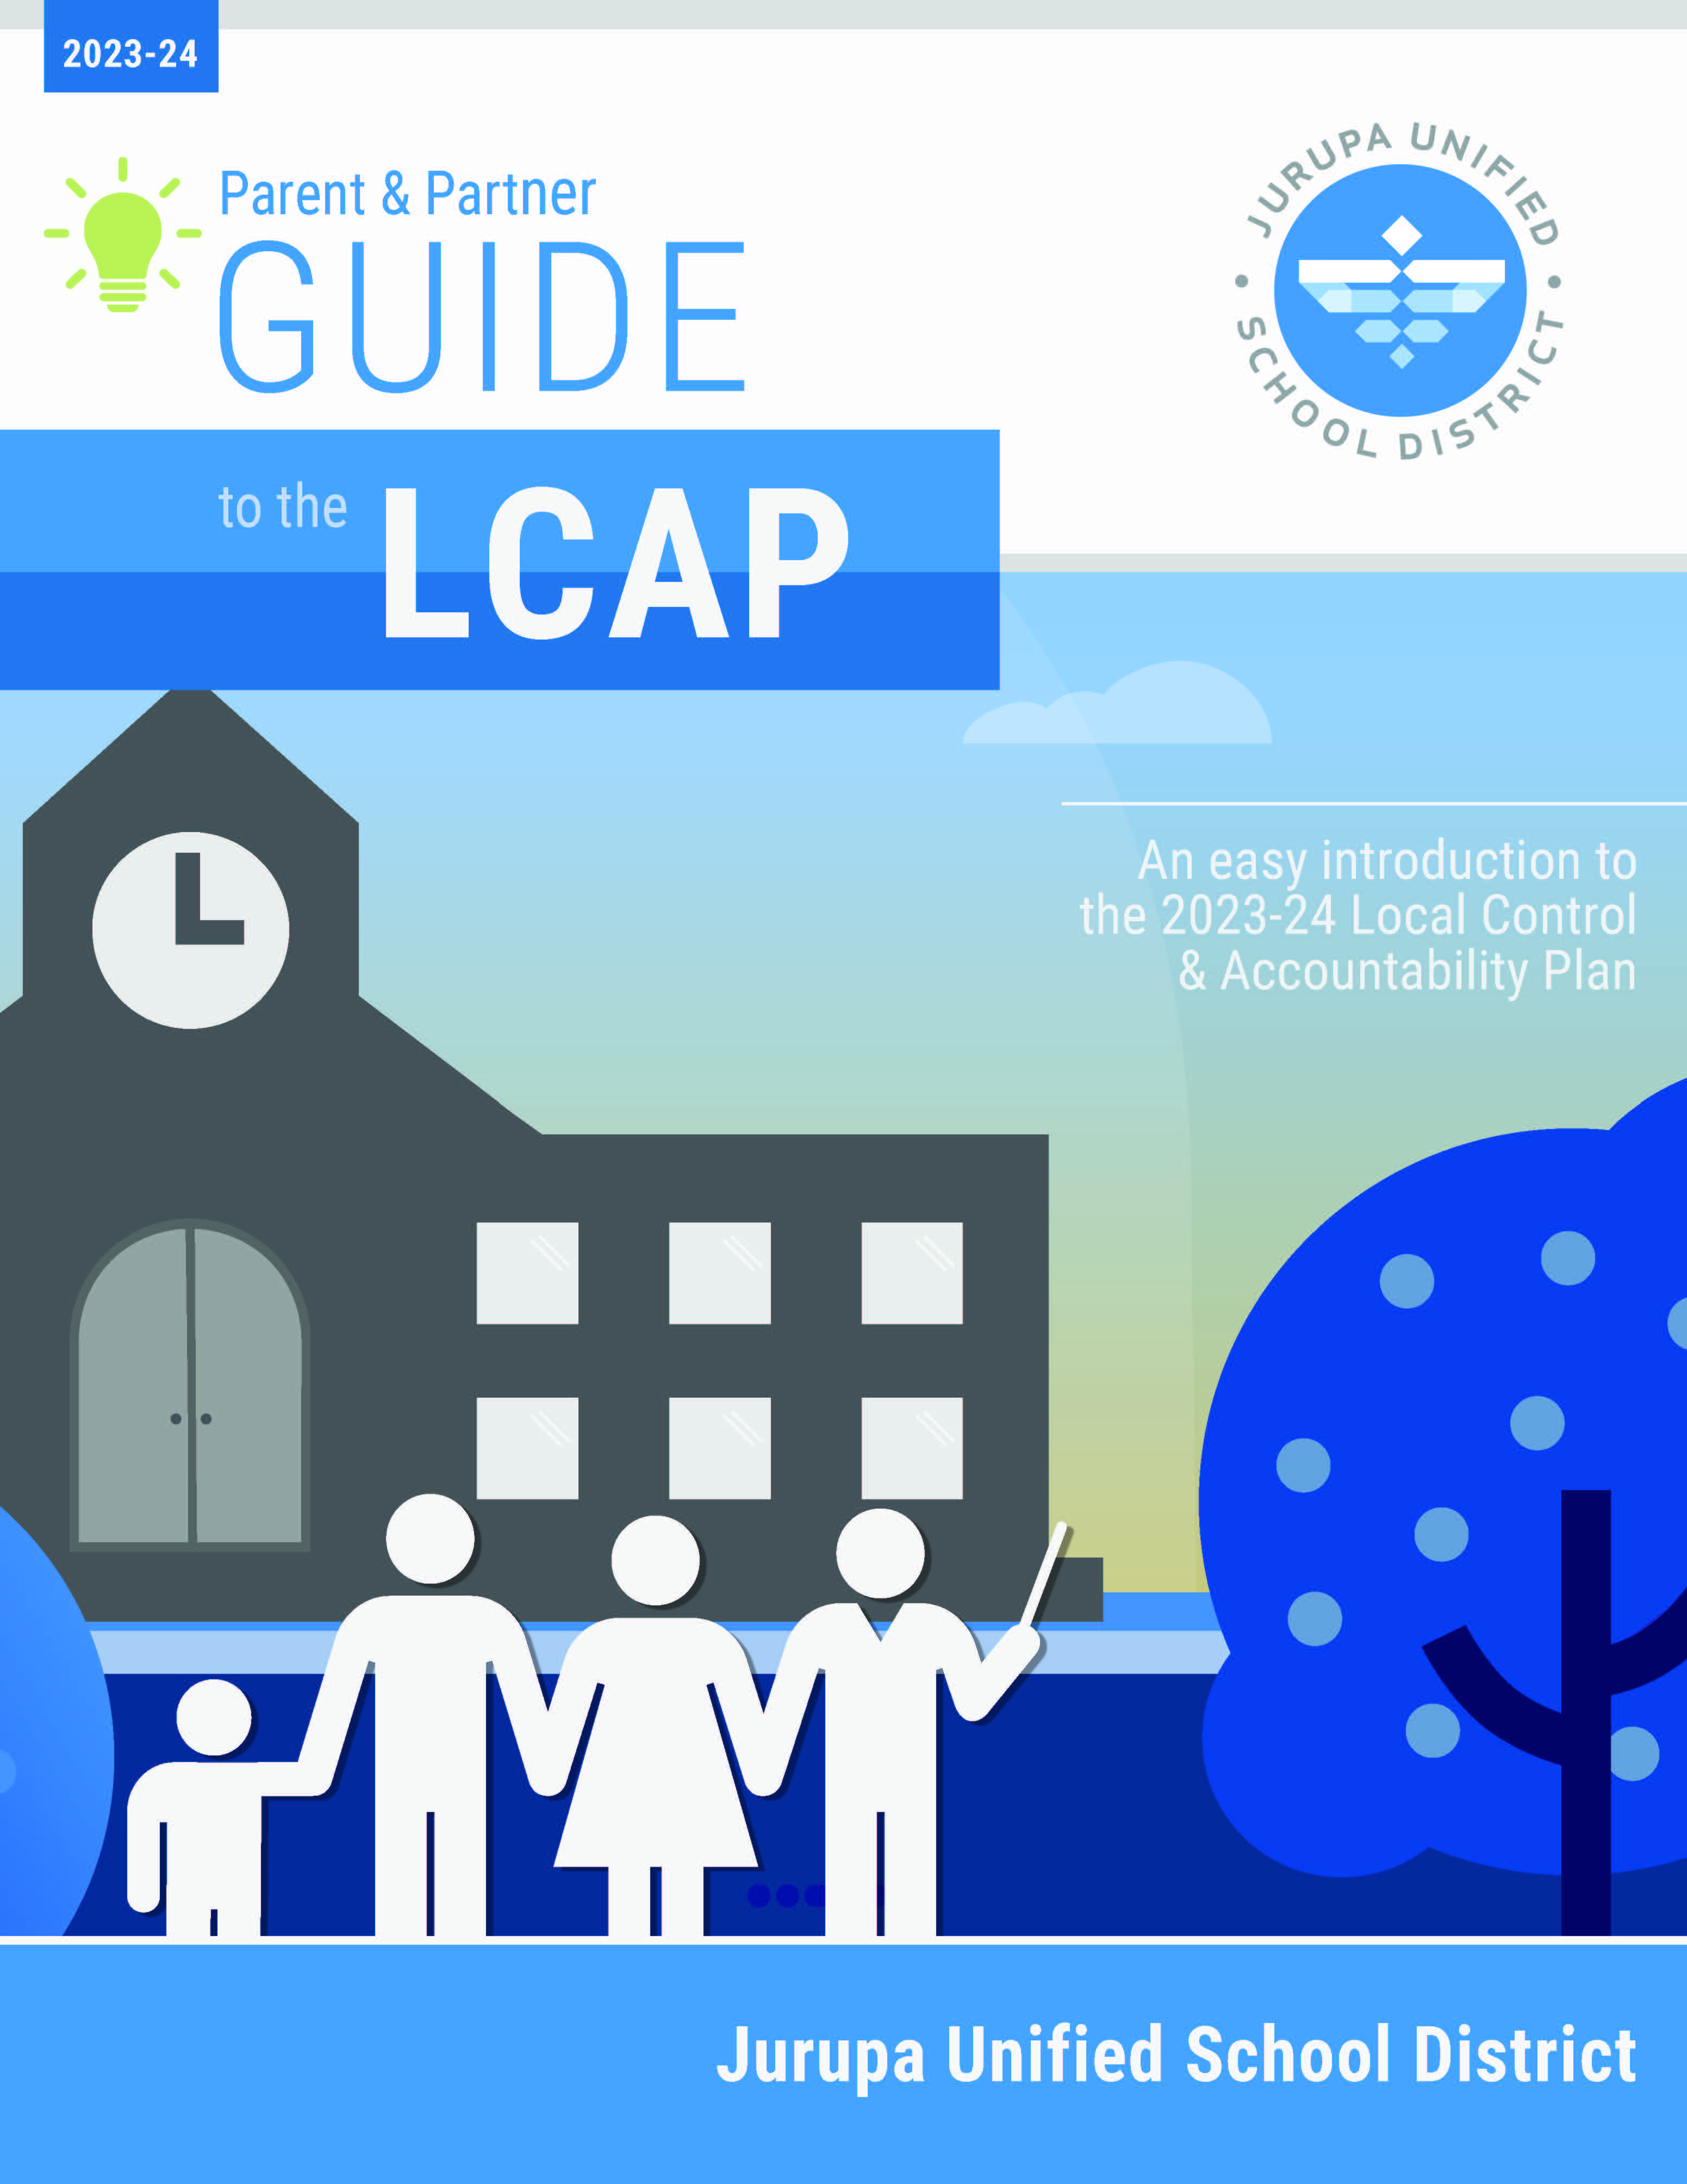 LCAP-infographic-JurupaUSD-2023-24-PPG-121123_Page_01.jpg